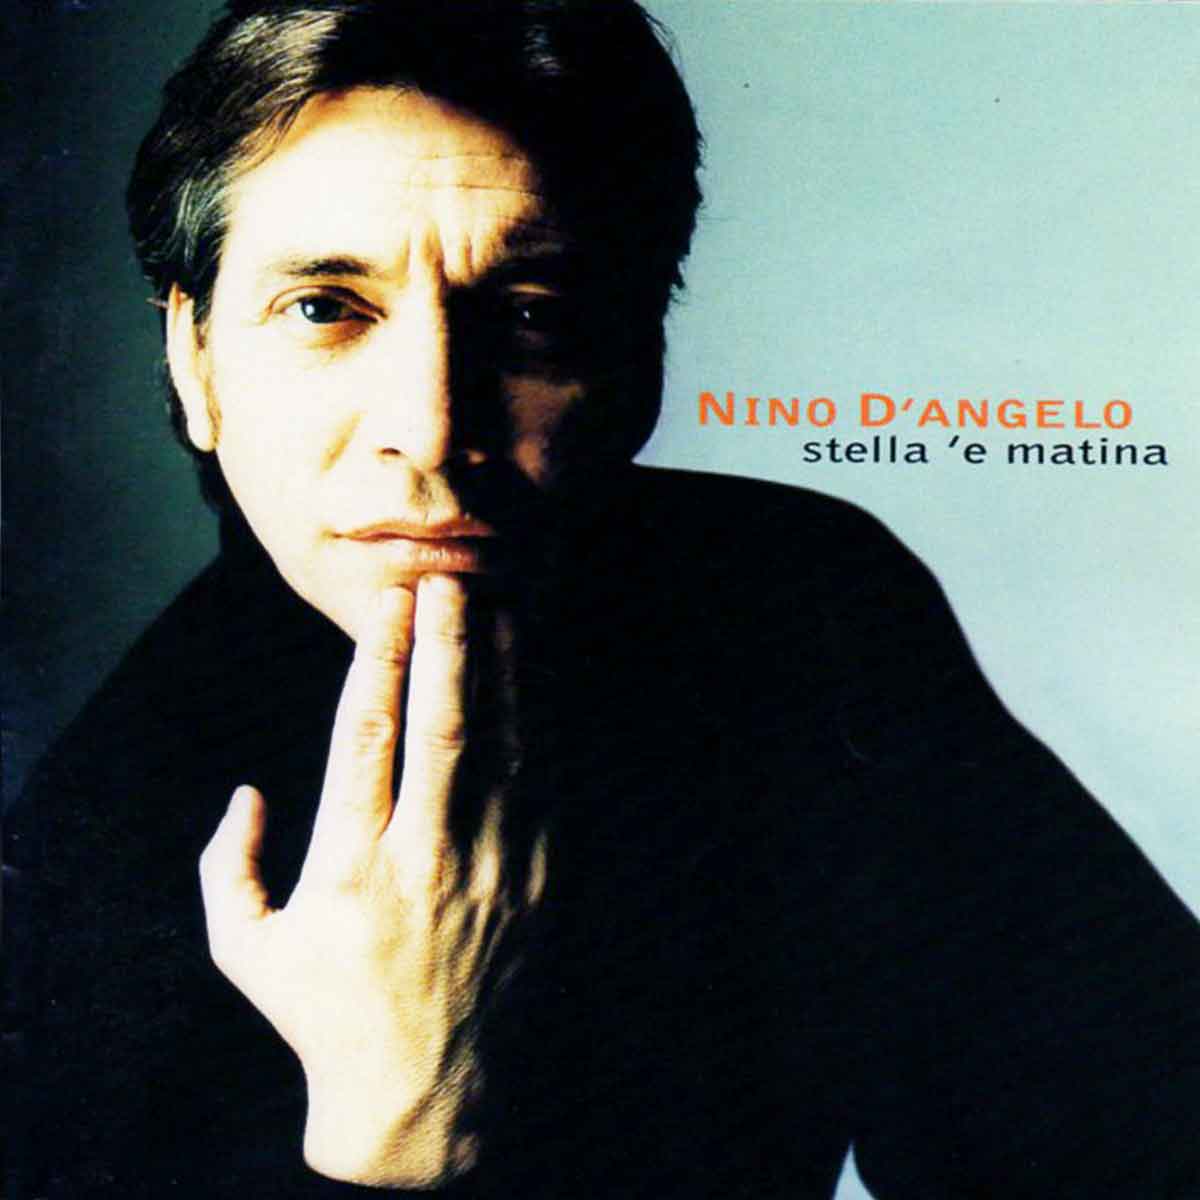 Nino D Angelo Discografia 407